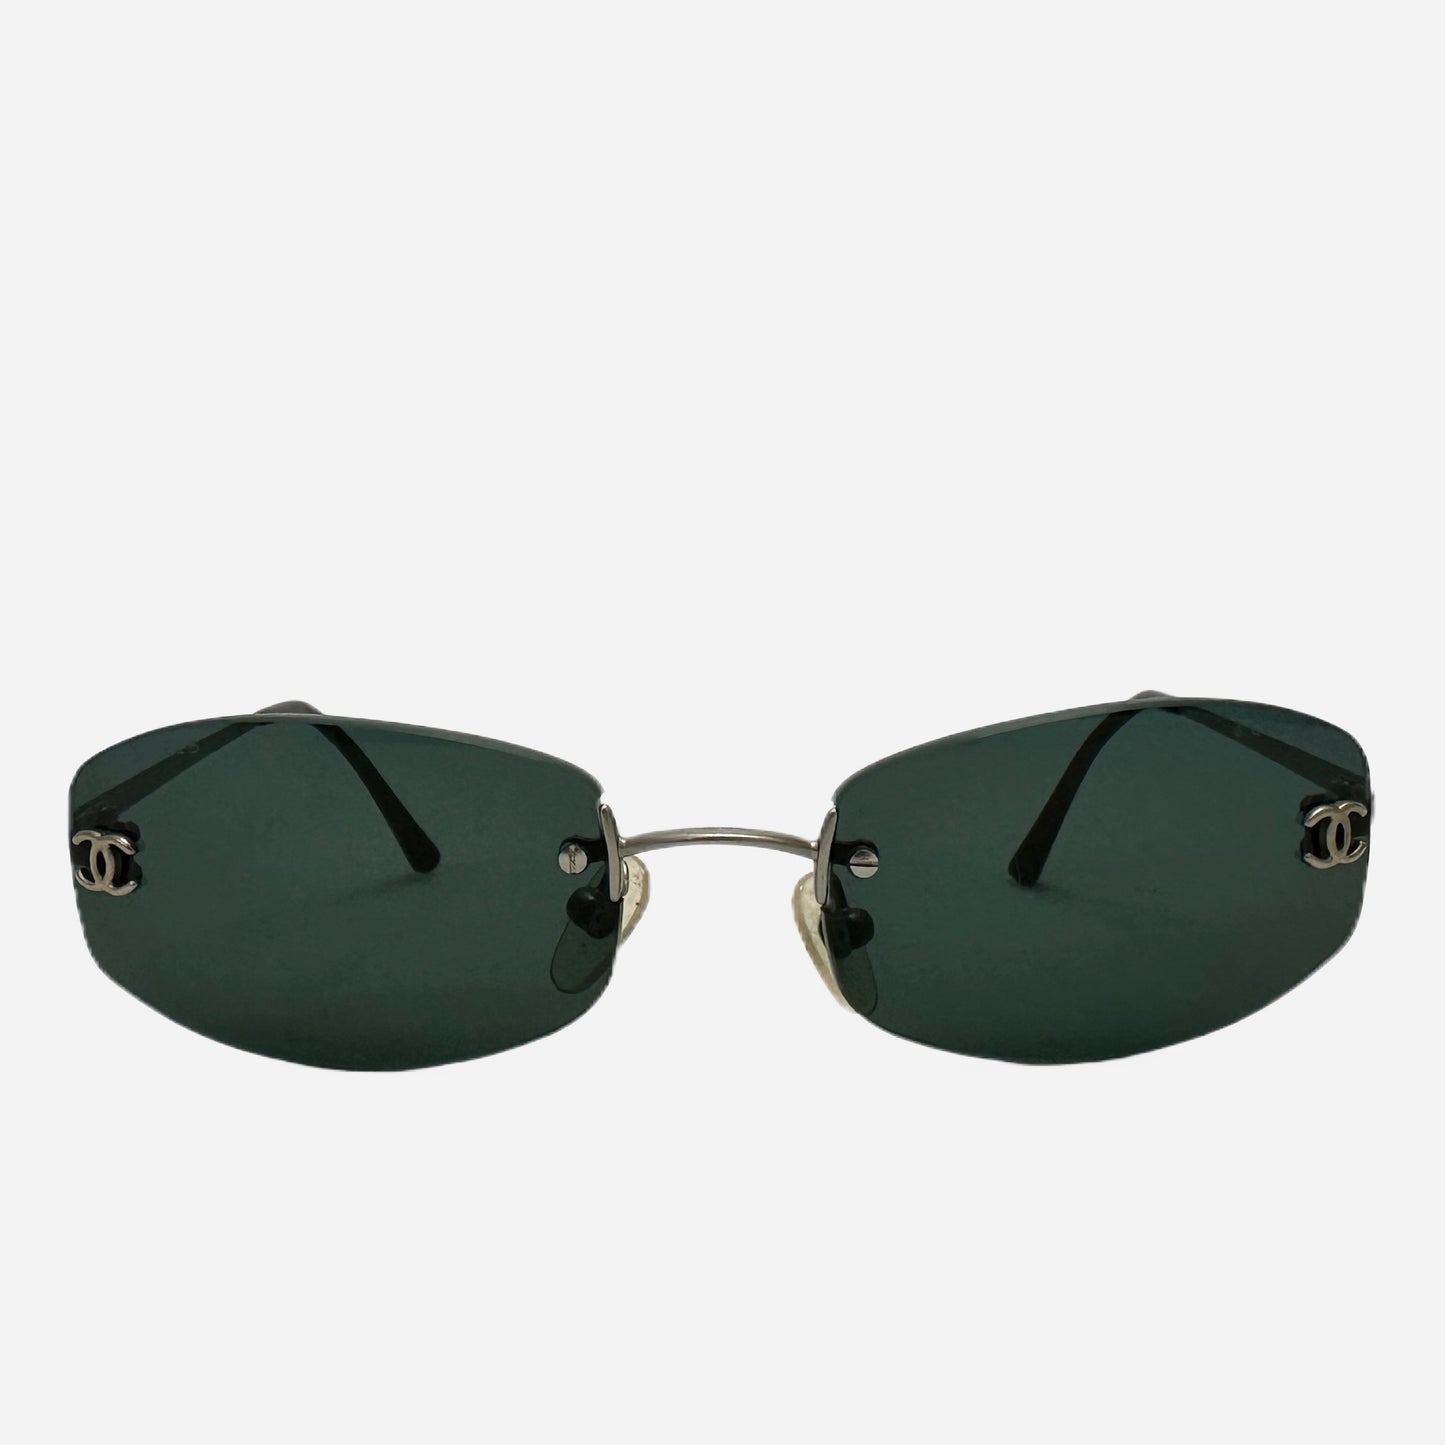 The-Seekers-Vintage-Coco-Chanel-Sunglasses-Sonnenbrille-Rahmenlos-4002